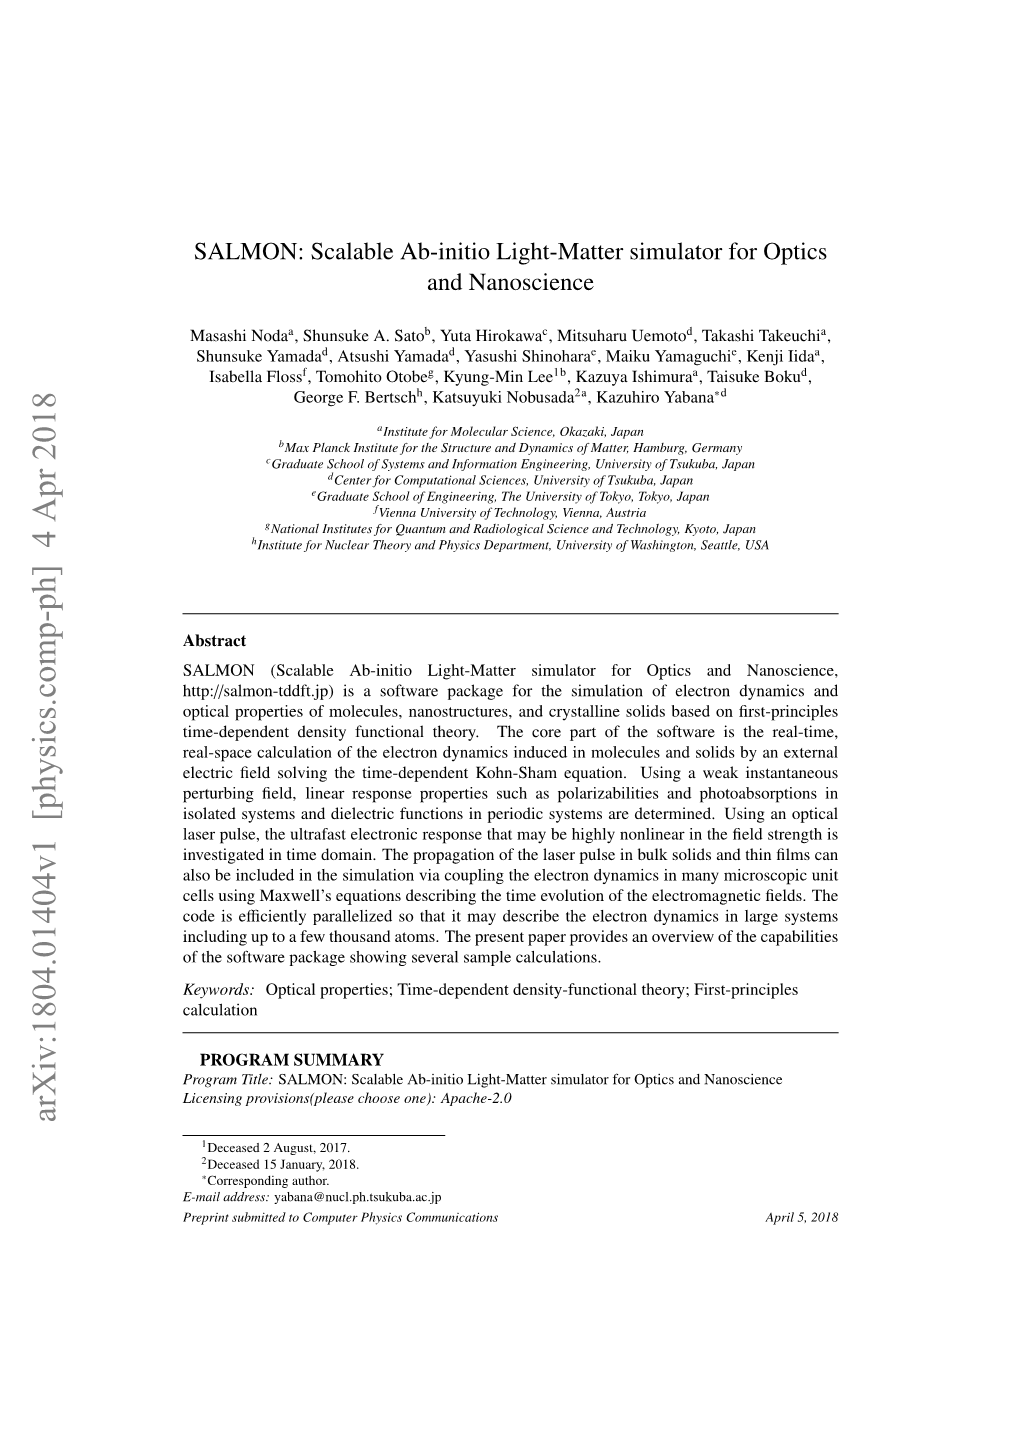 SALMON: Scalable Ab-Initio Light-Matter Simulator for Optics and Nanoscience